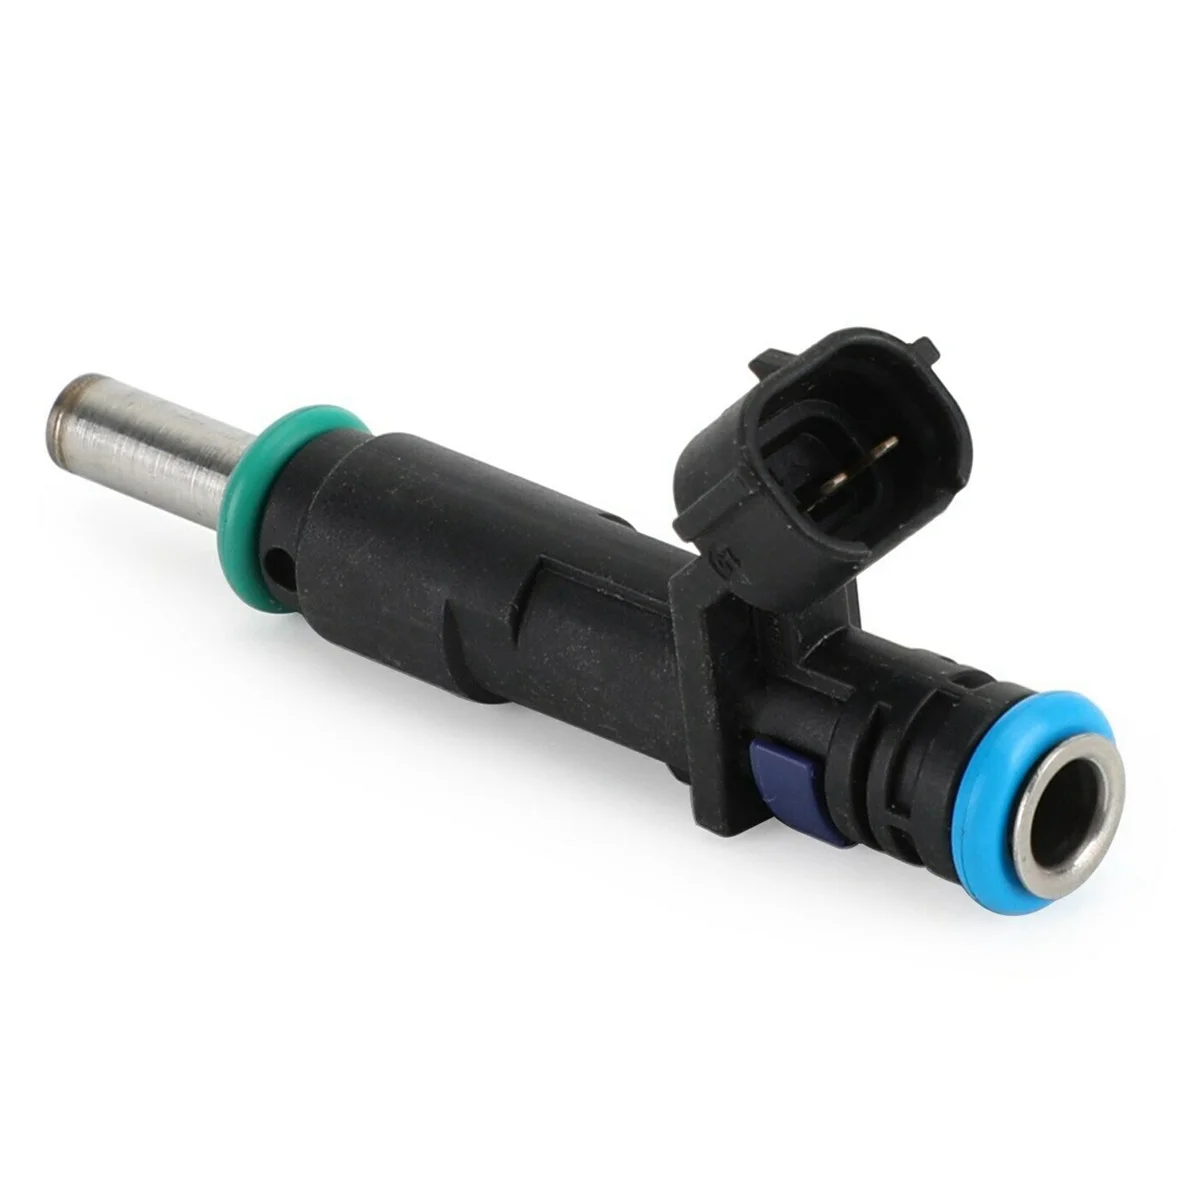 

6Pcs Motorcycle Fuel Injector Nozzles 420874834 for SEA-DOO 4-TEC Gtr Gtx Rxp Rxt X Wake Pro 155 215 260 09-17 420874846